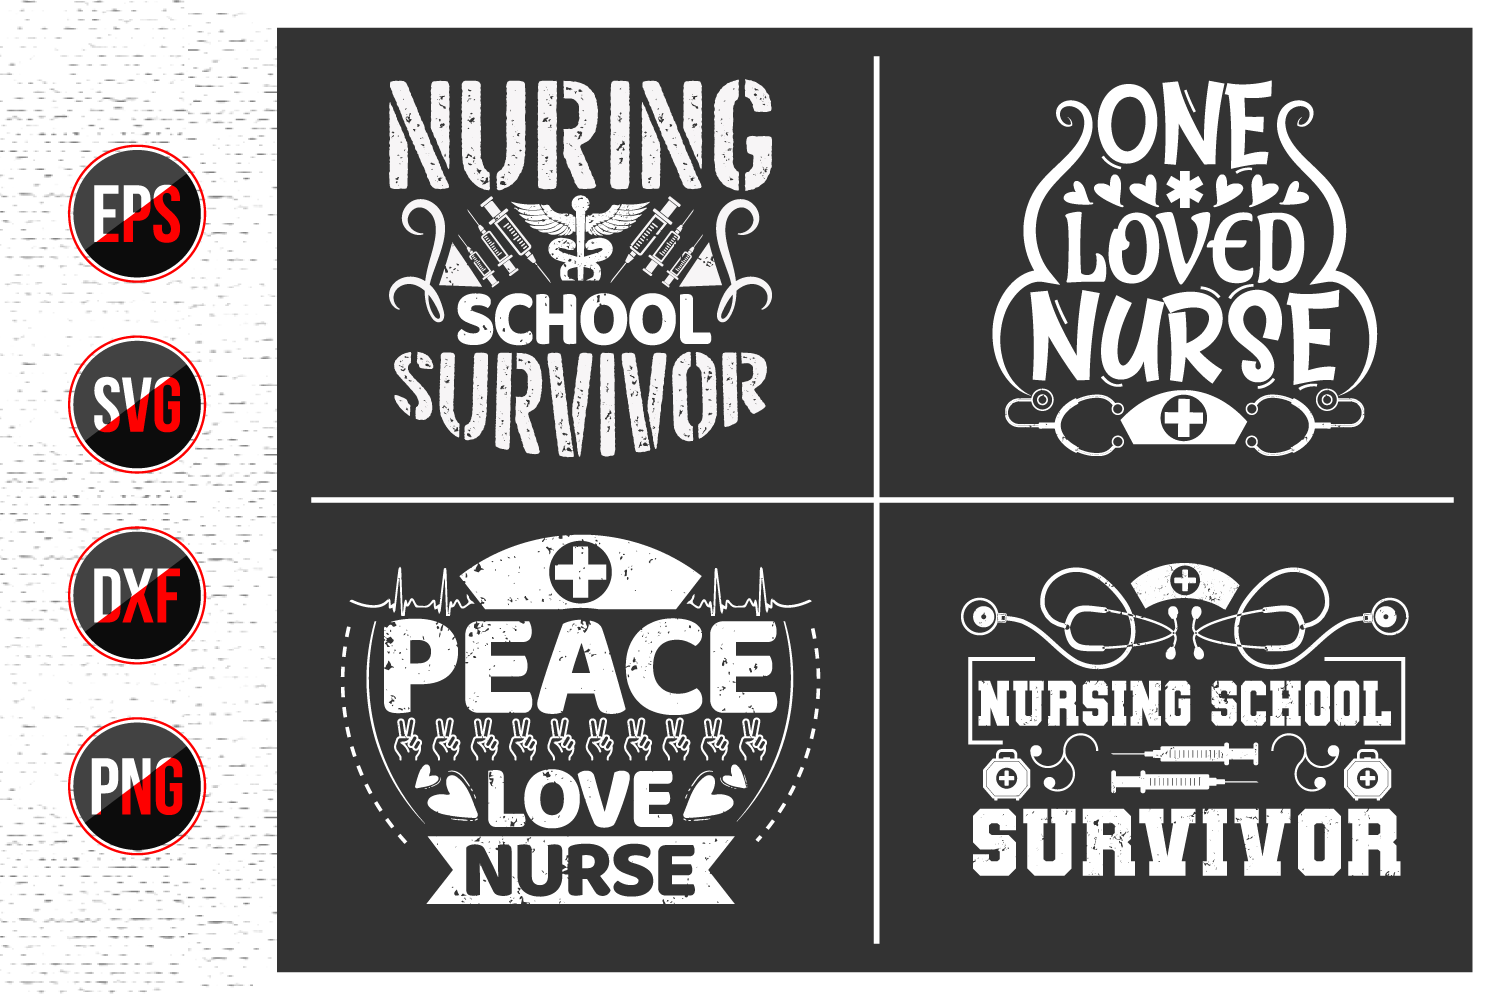 nurse love quotes